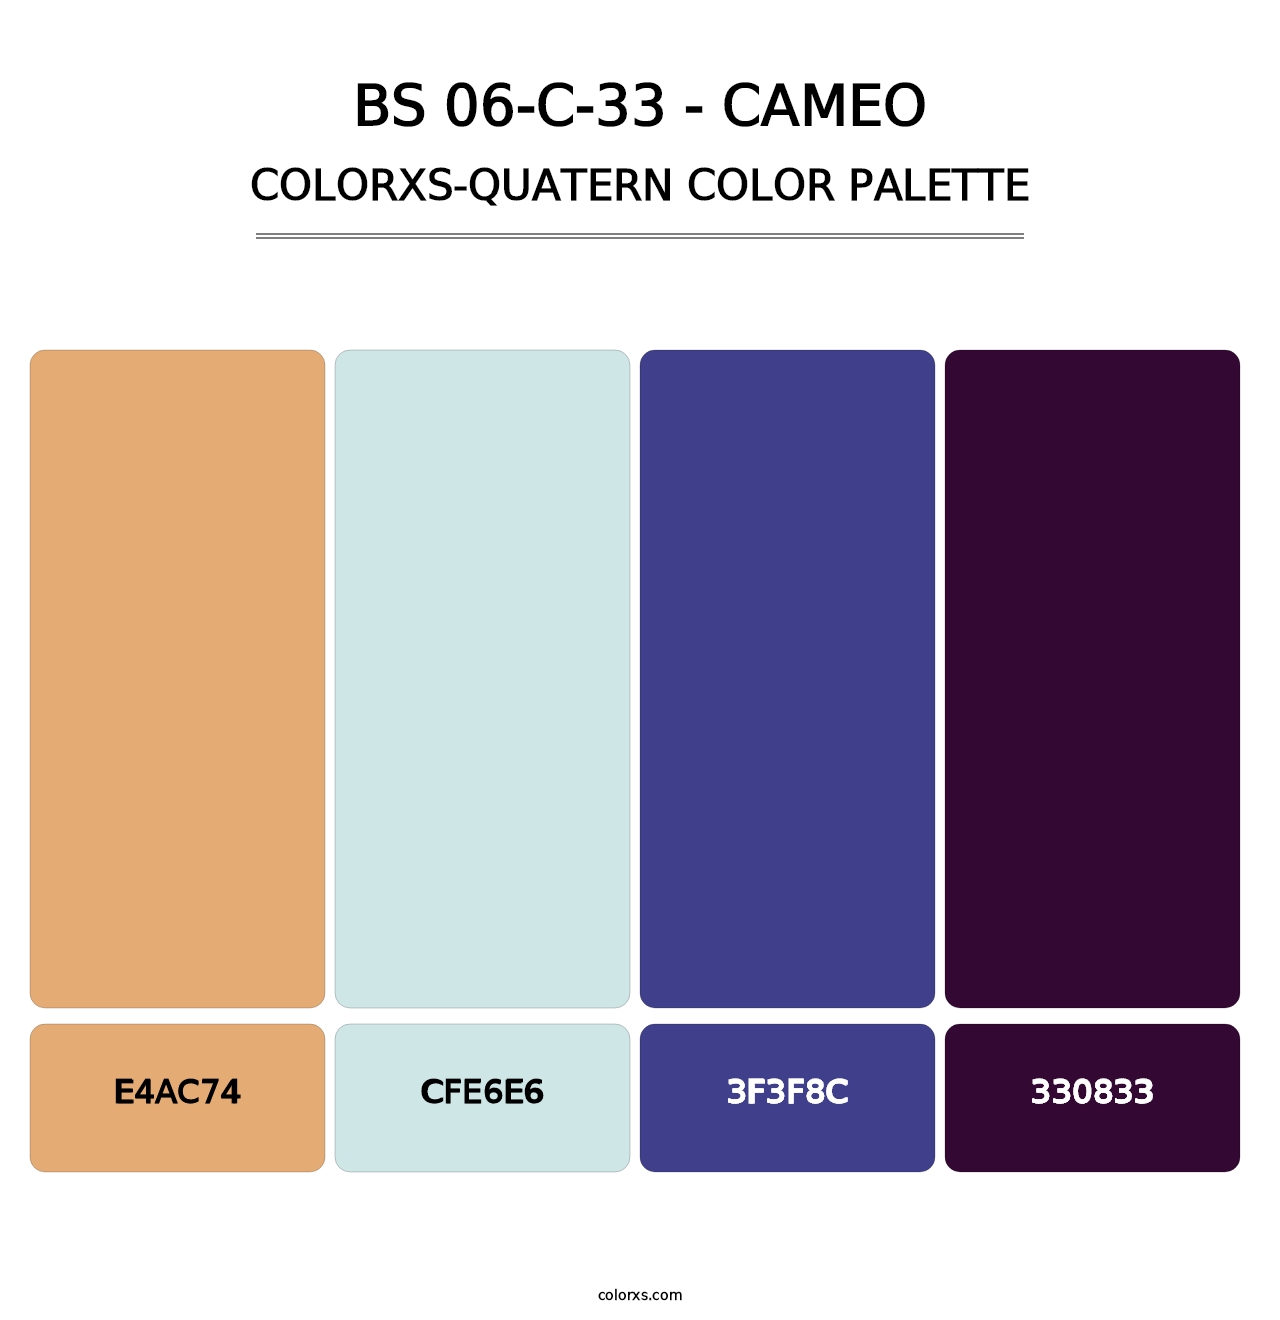 BS 06-C-33 - Cameo - Colorxs Quatern Palette